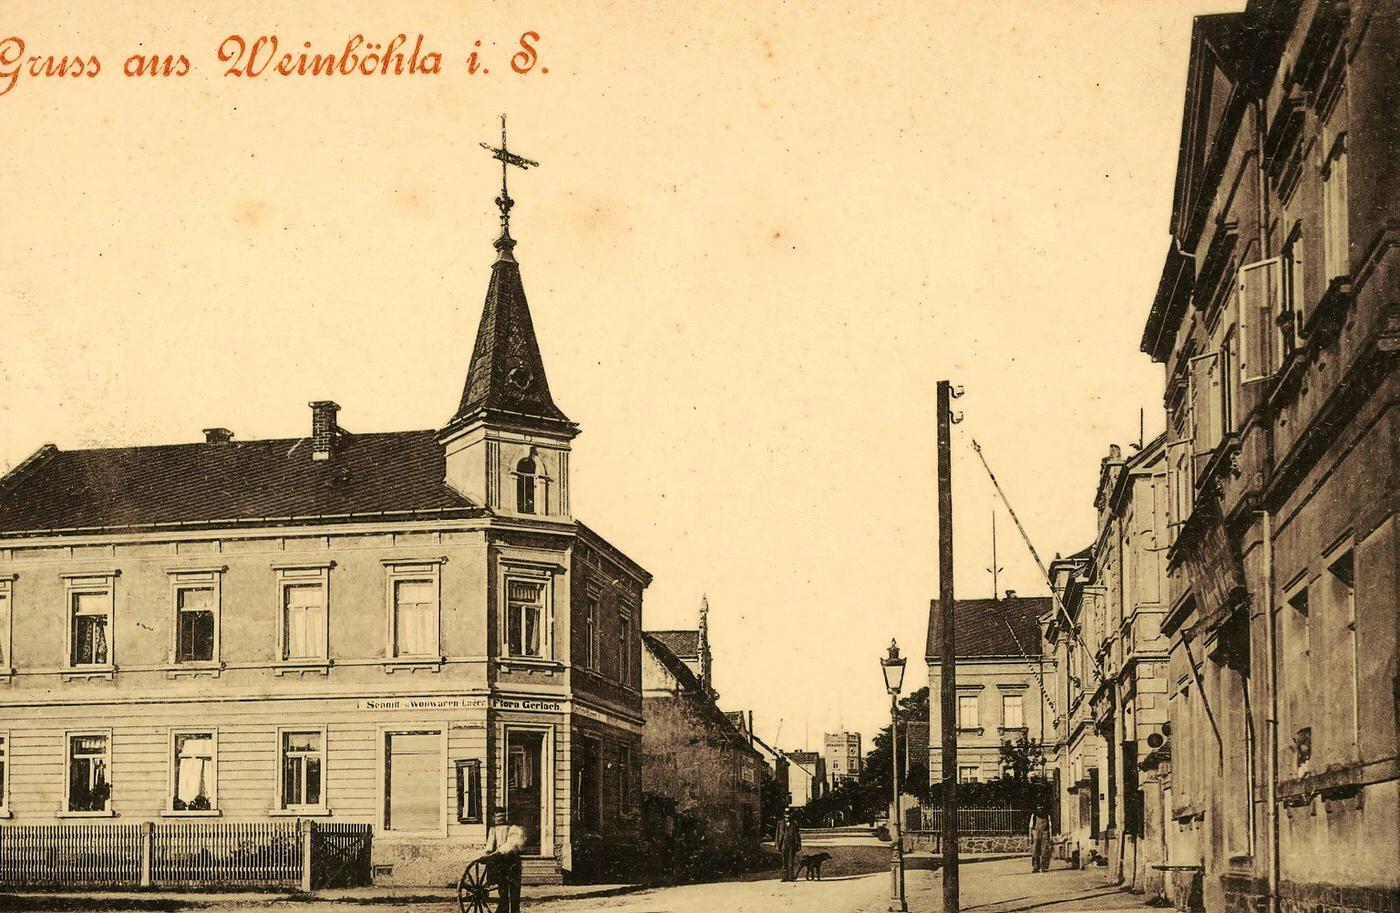 Buildings in Landkreis Meissen, Weather vanes, Shops, Cartwheels, Weinbohla, Landkreis Meissen, Strasse, Germany, 1900s.